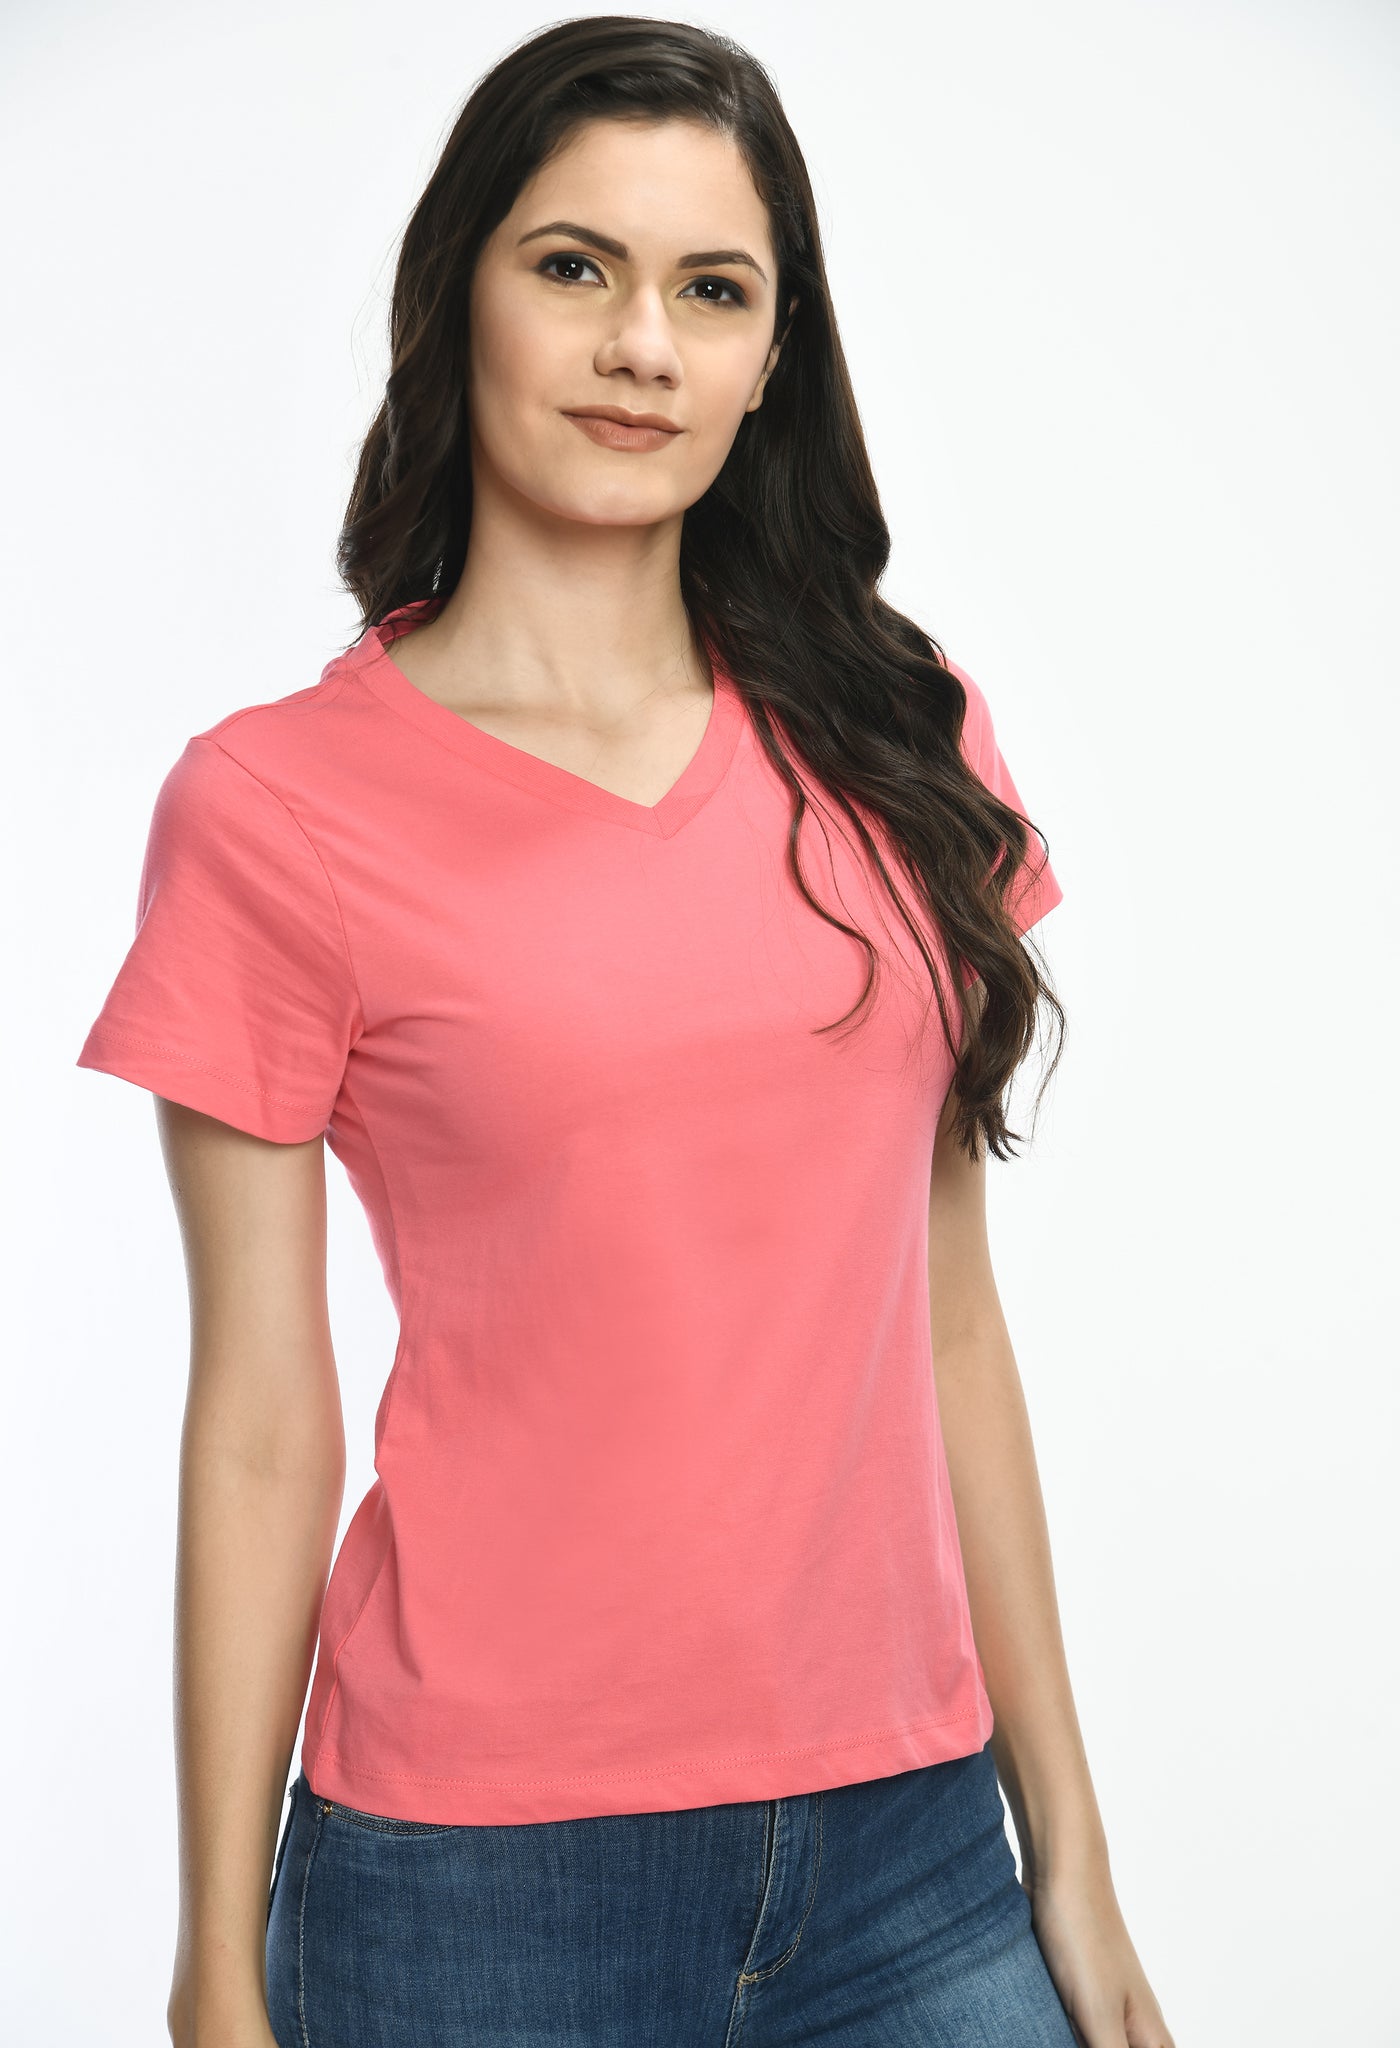 Bubblegum Pink V-Neck Comfort Fashion T-Shirt